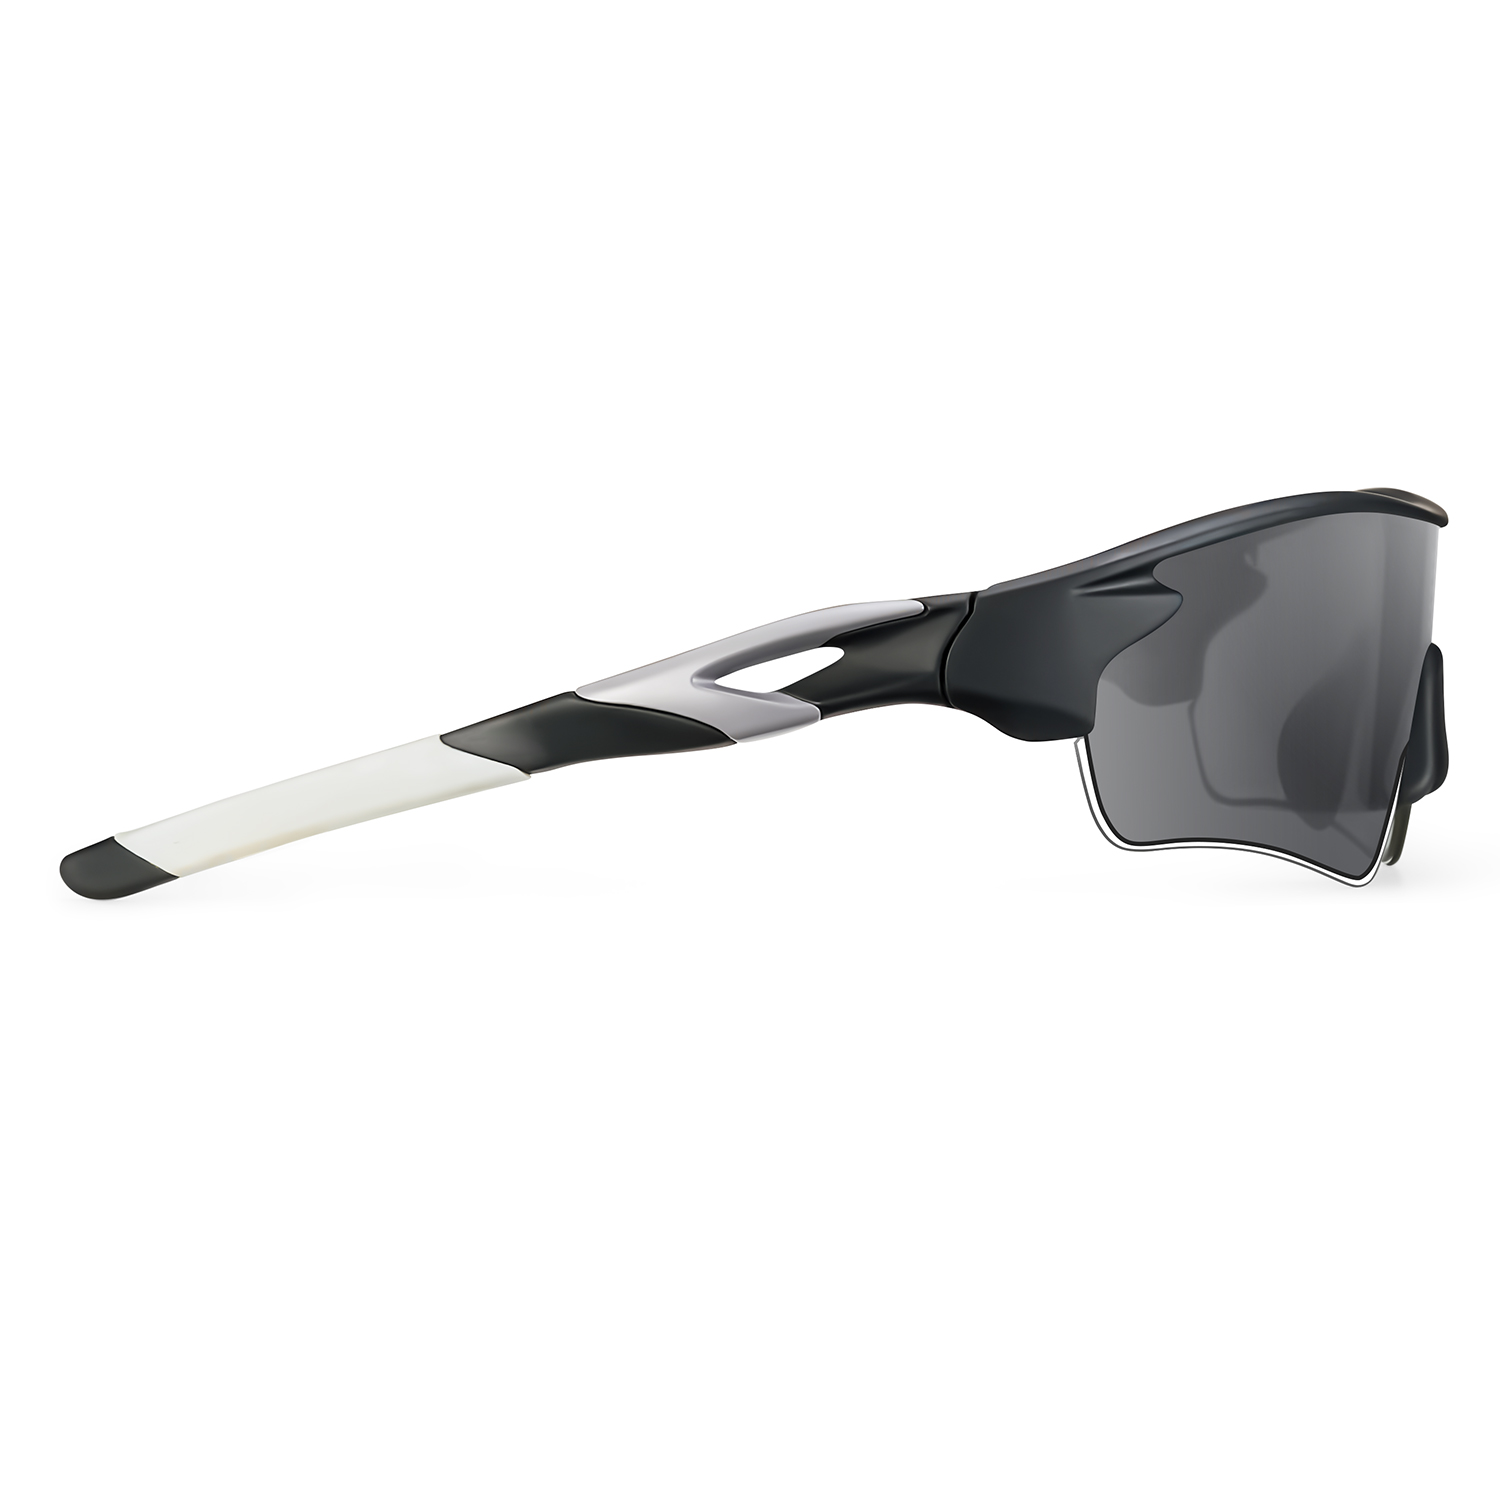 Reanson Custom Wireless LCD Bluetooth Sports Sunglasses